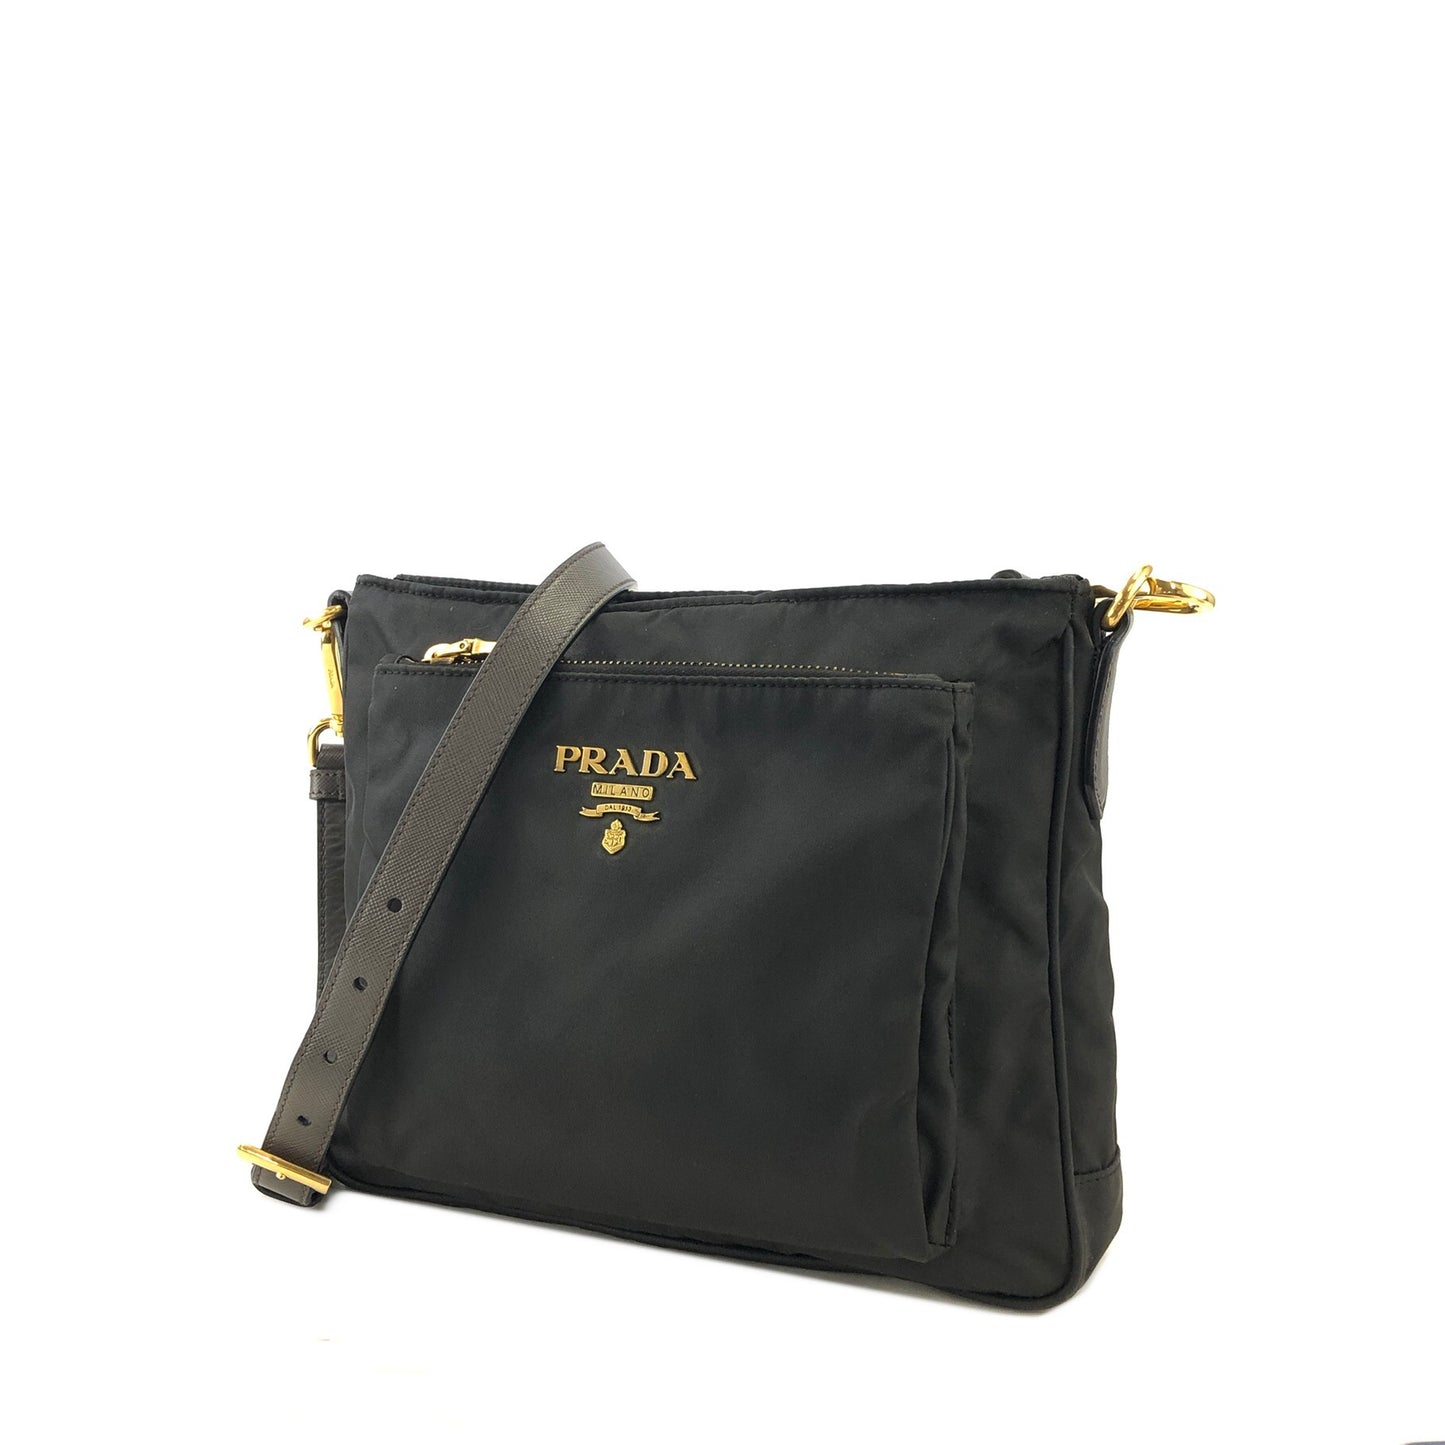 PRADA Logo Nylon Saffiano Leather Crossbody Shoulder bag Black Vintage eu2jv5